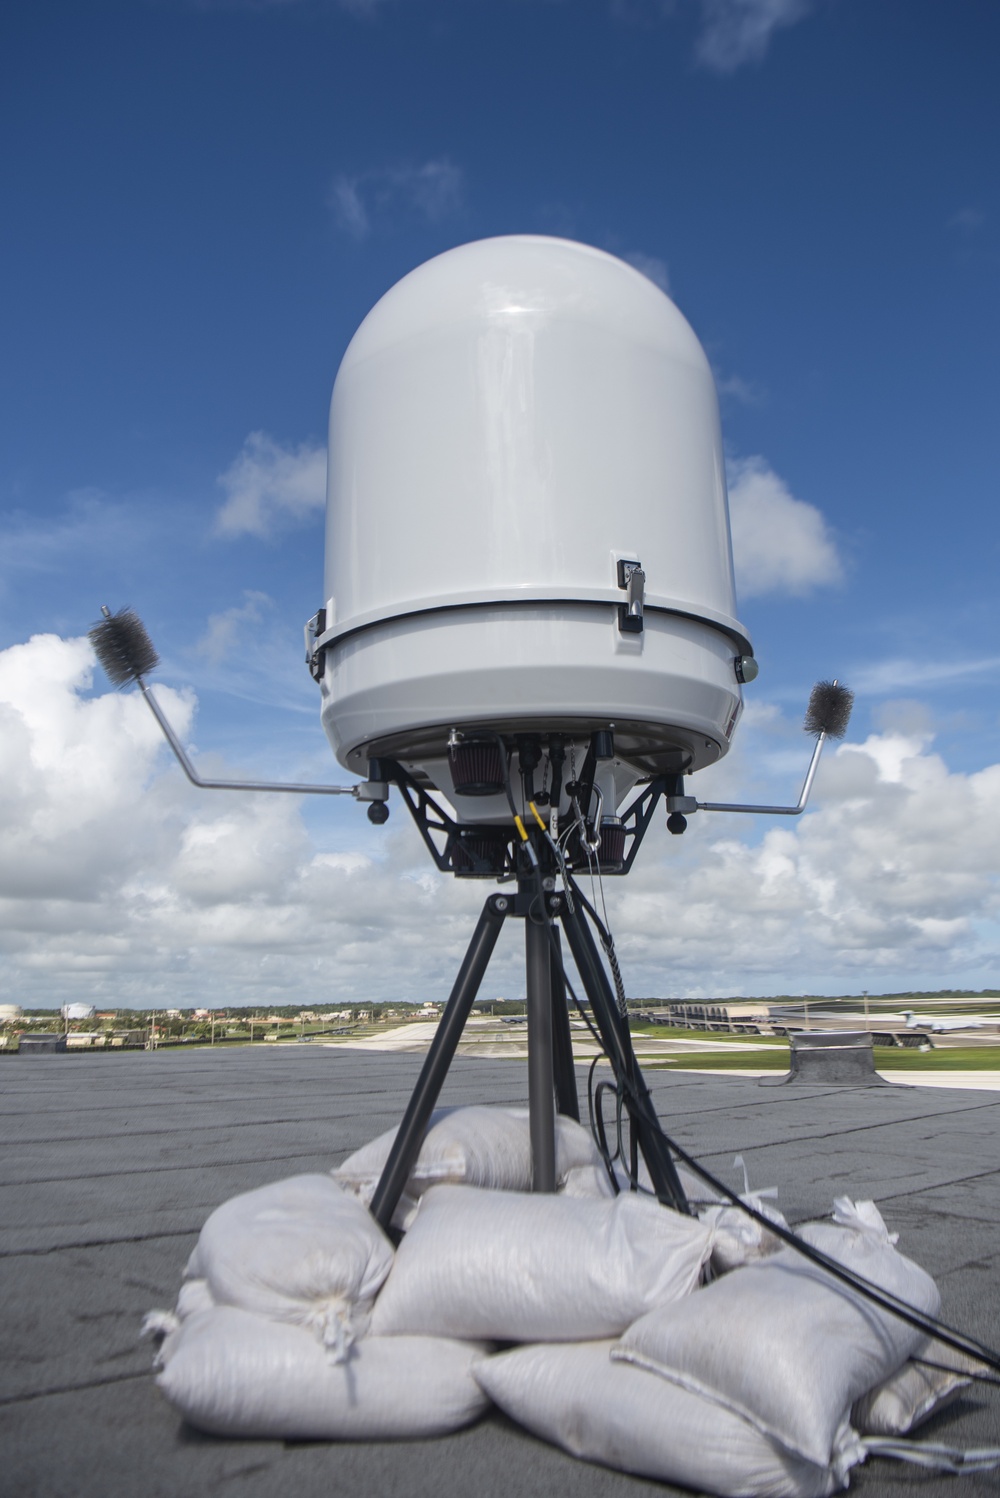 DVIDS Images Andersen Implements Portable Doppler Radar [Image 1 of 3]